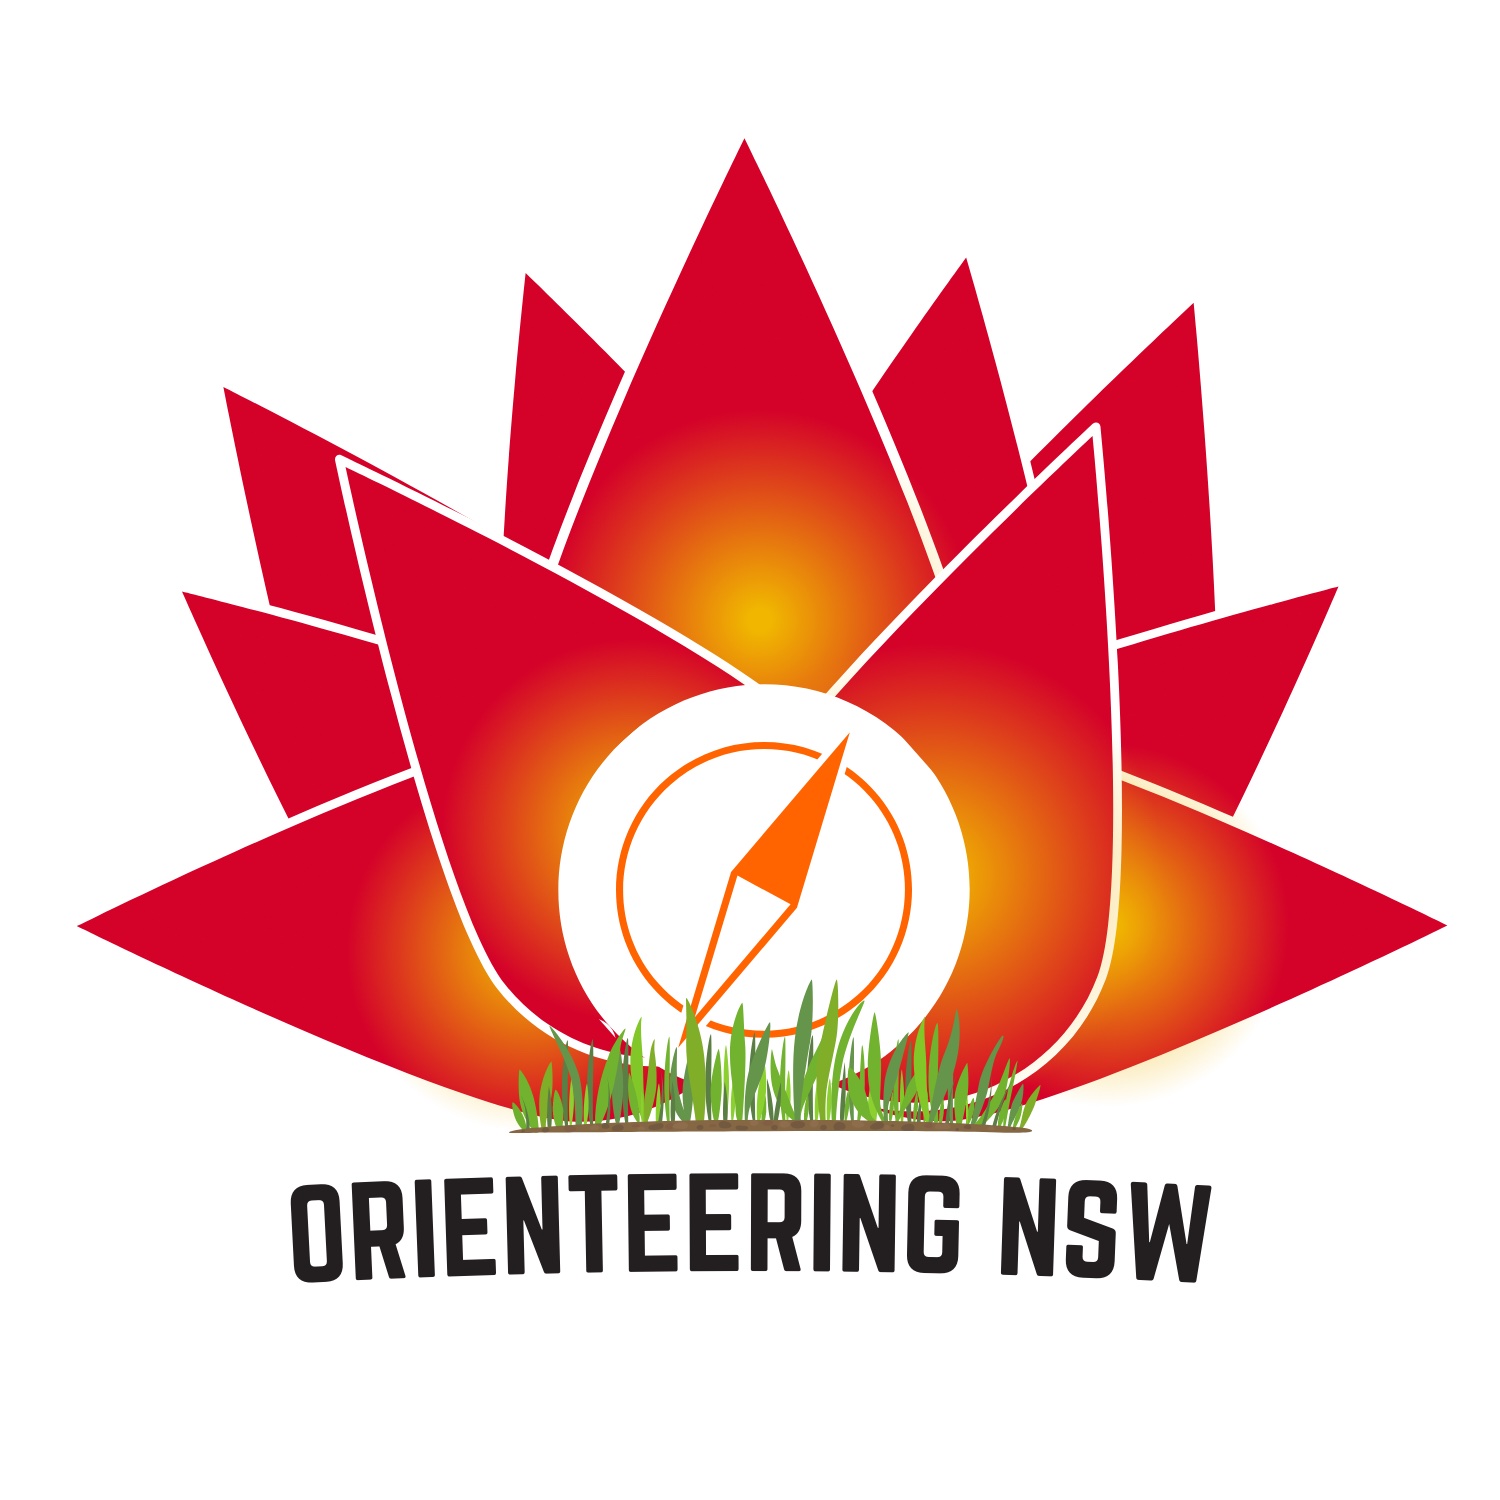 Orienteering NSW logo